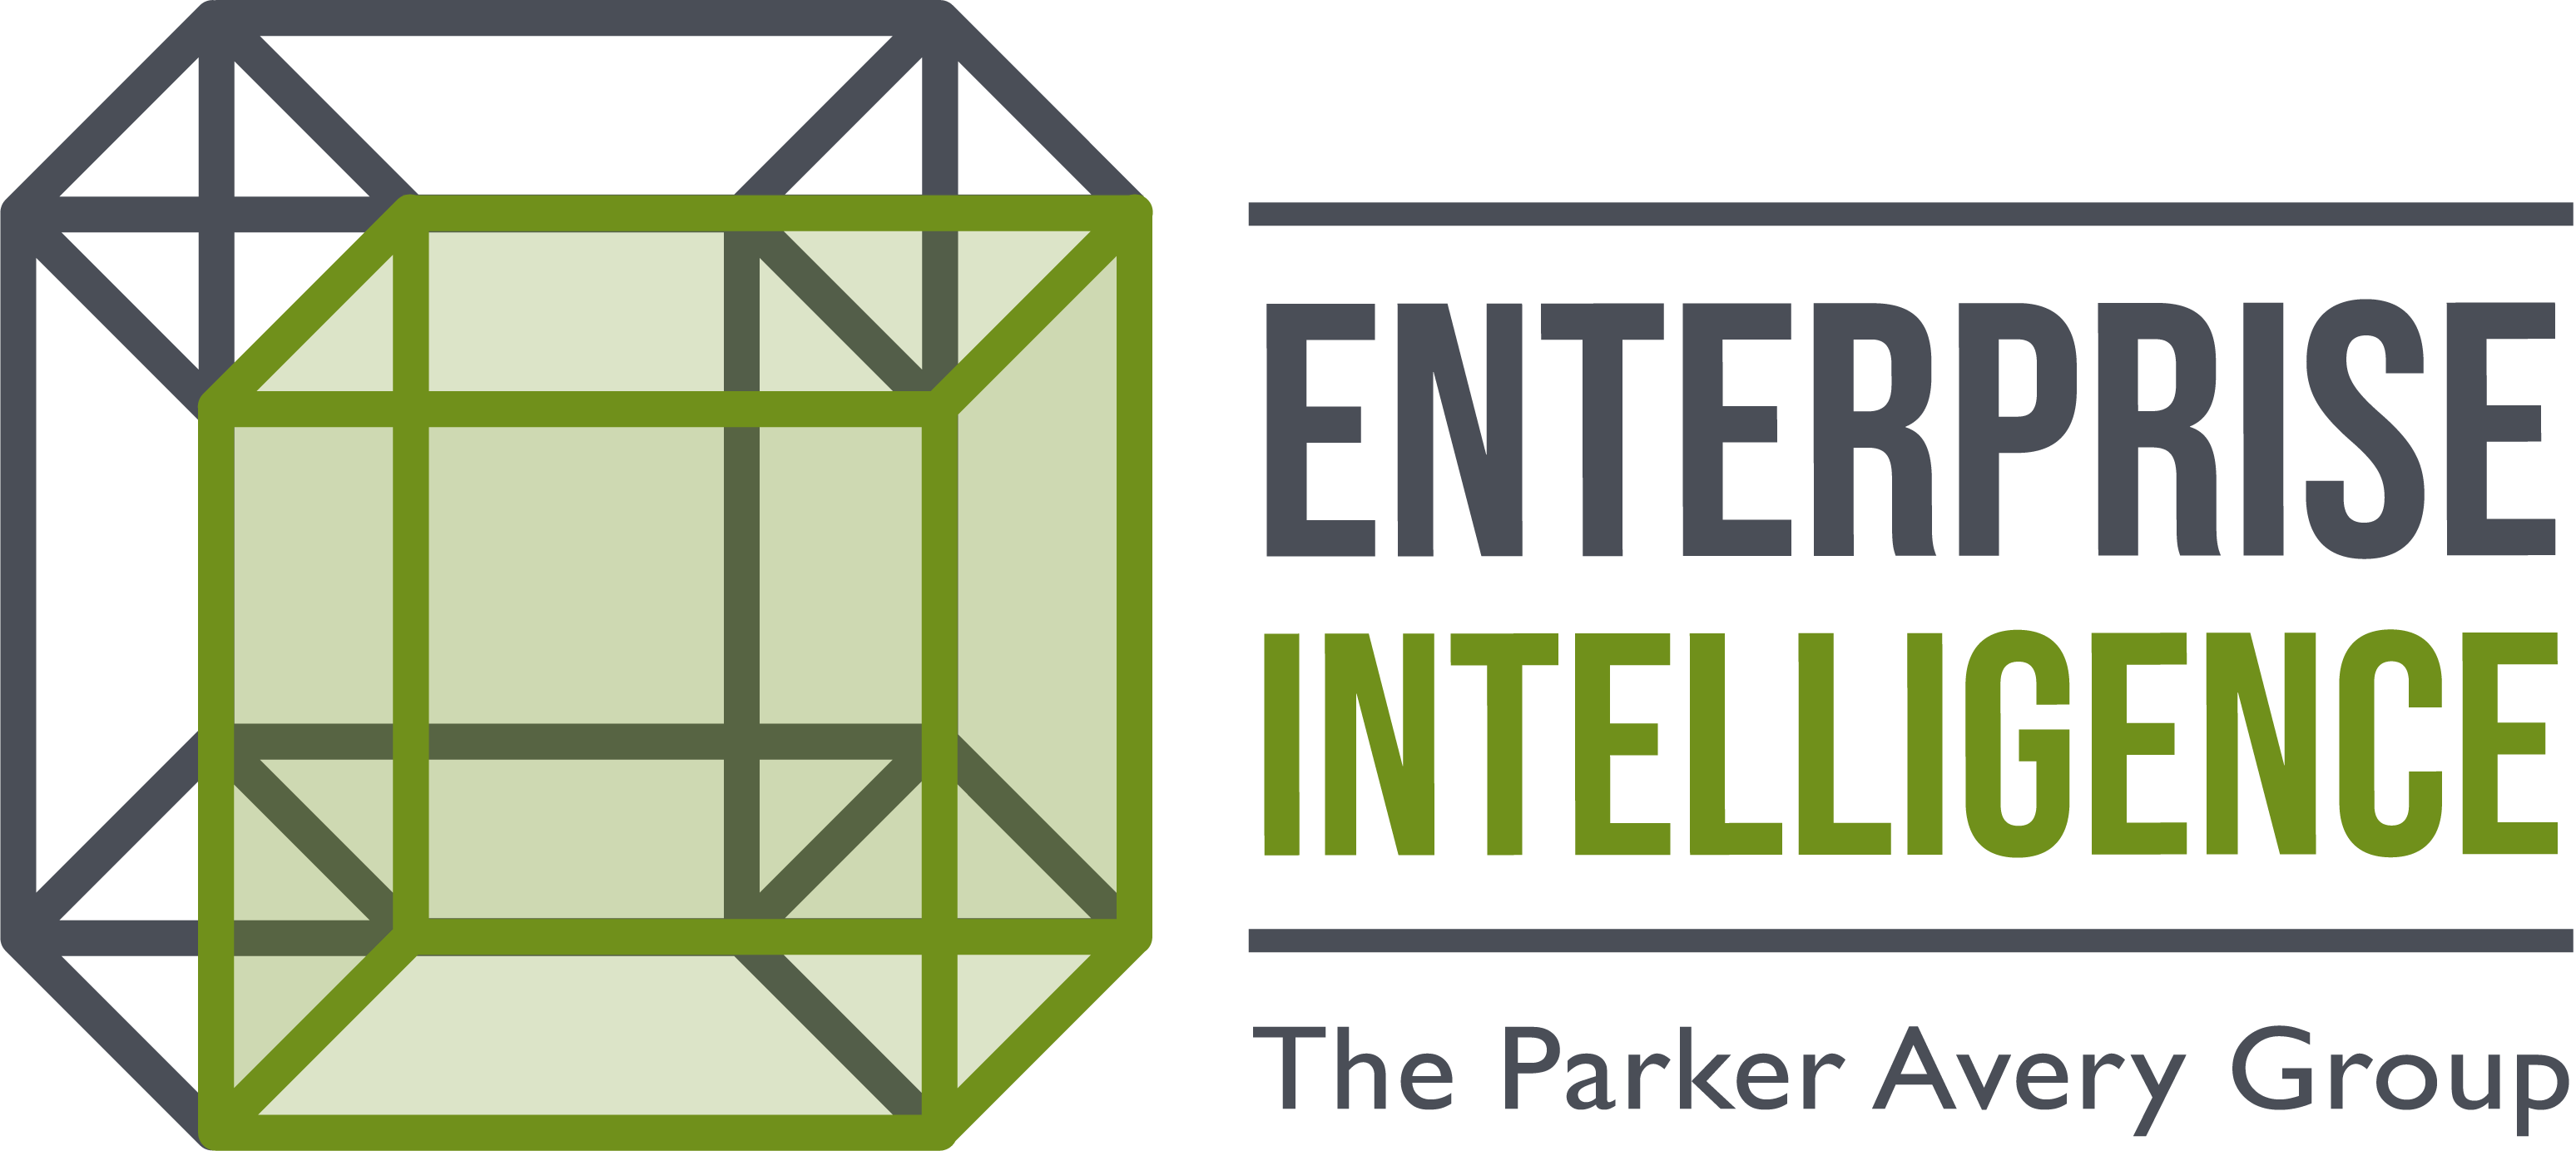 Enterprise Intelligence